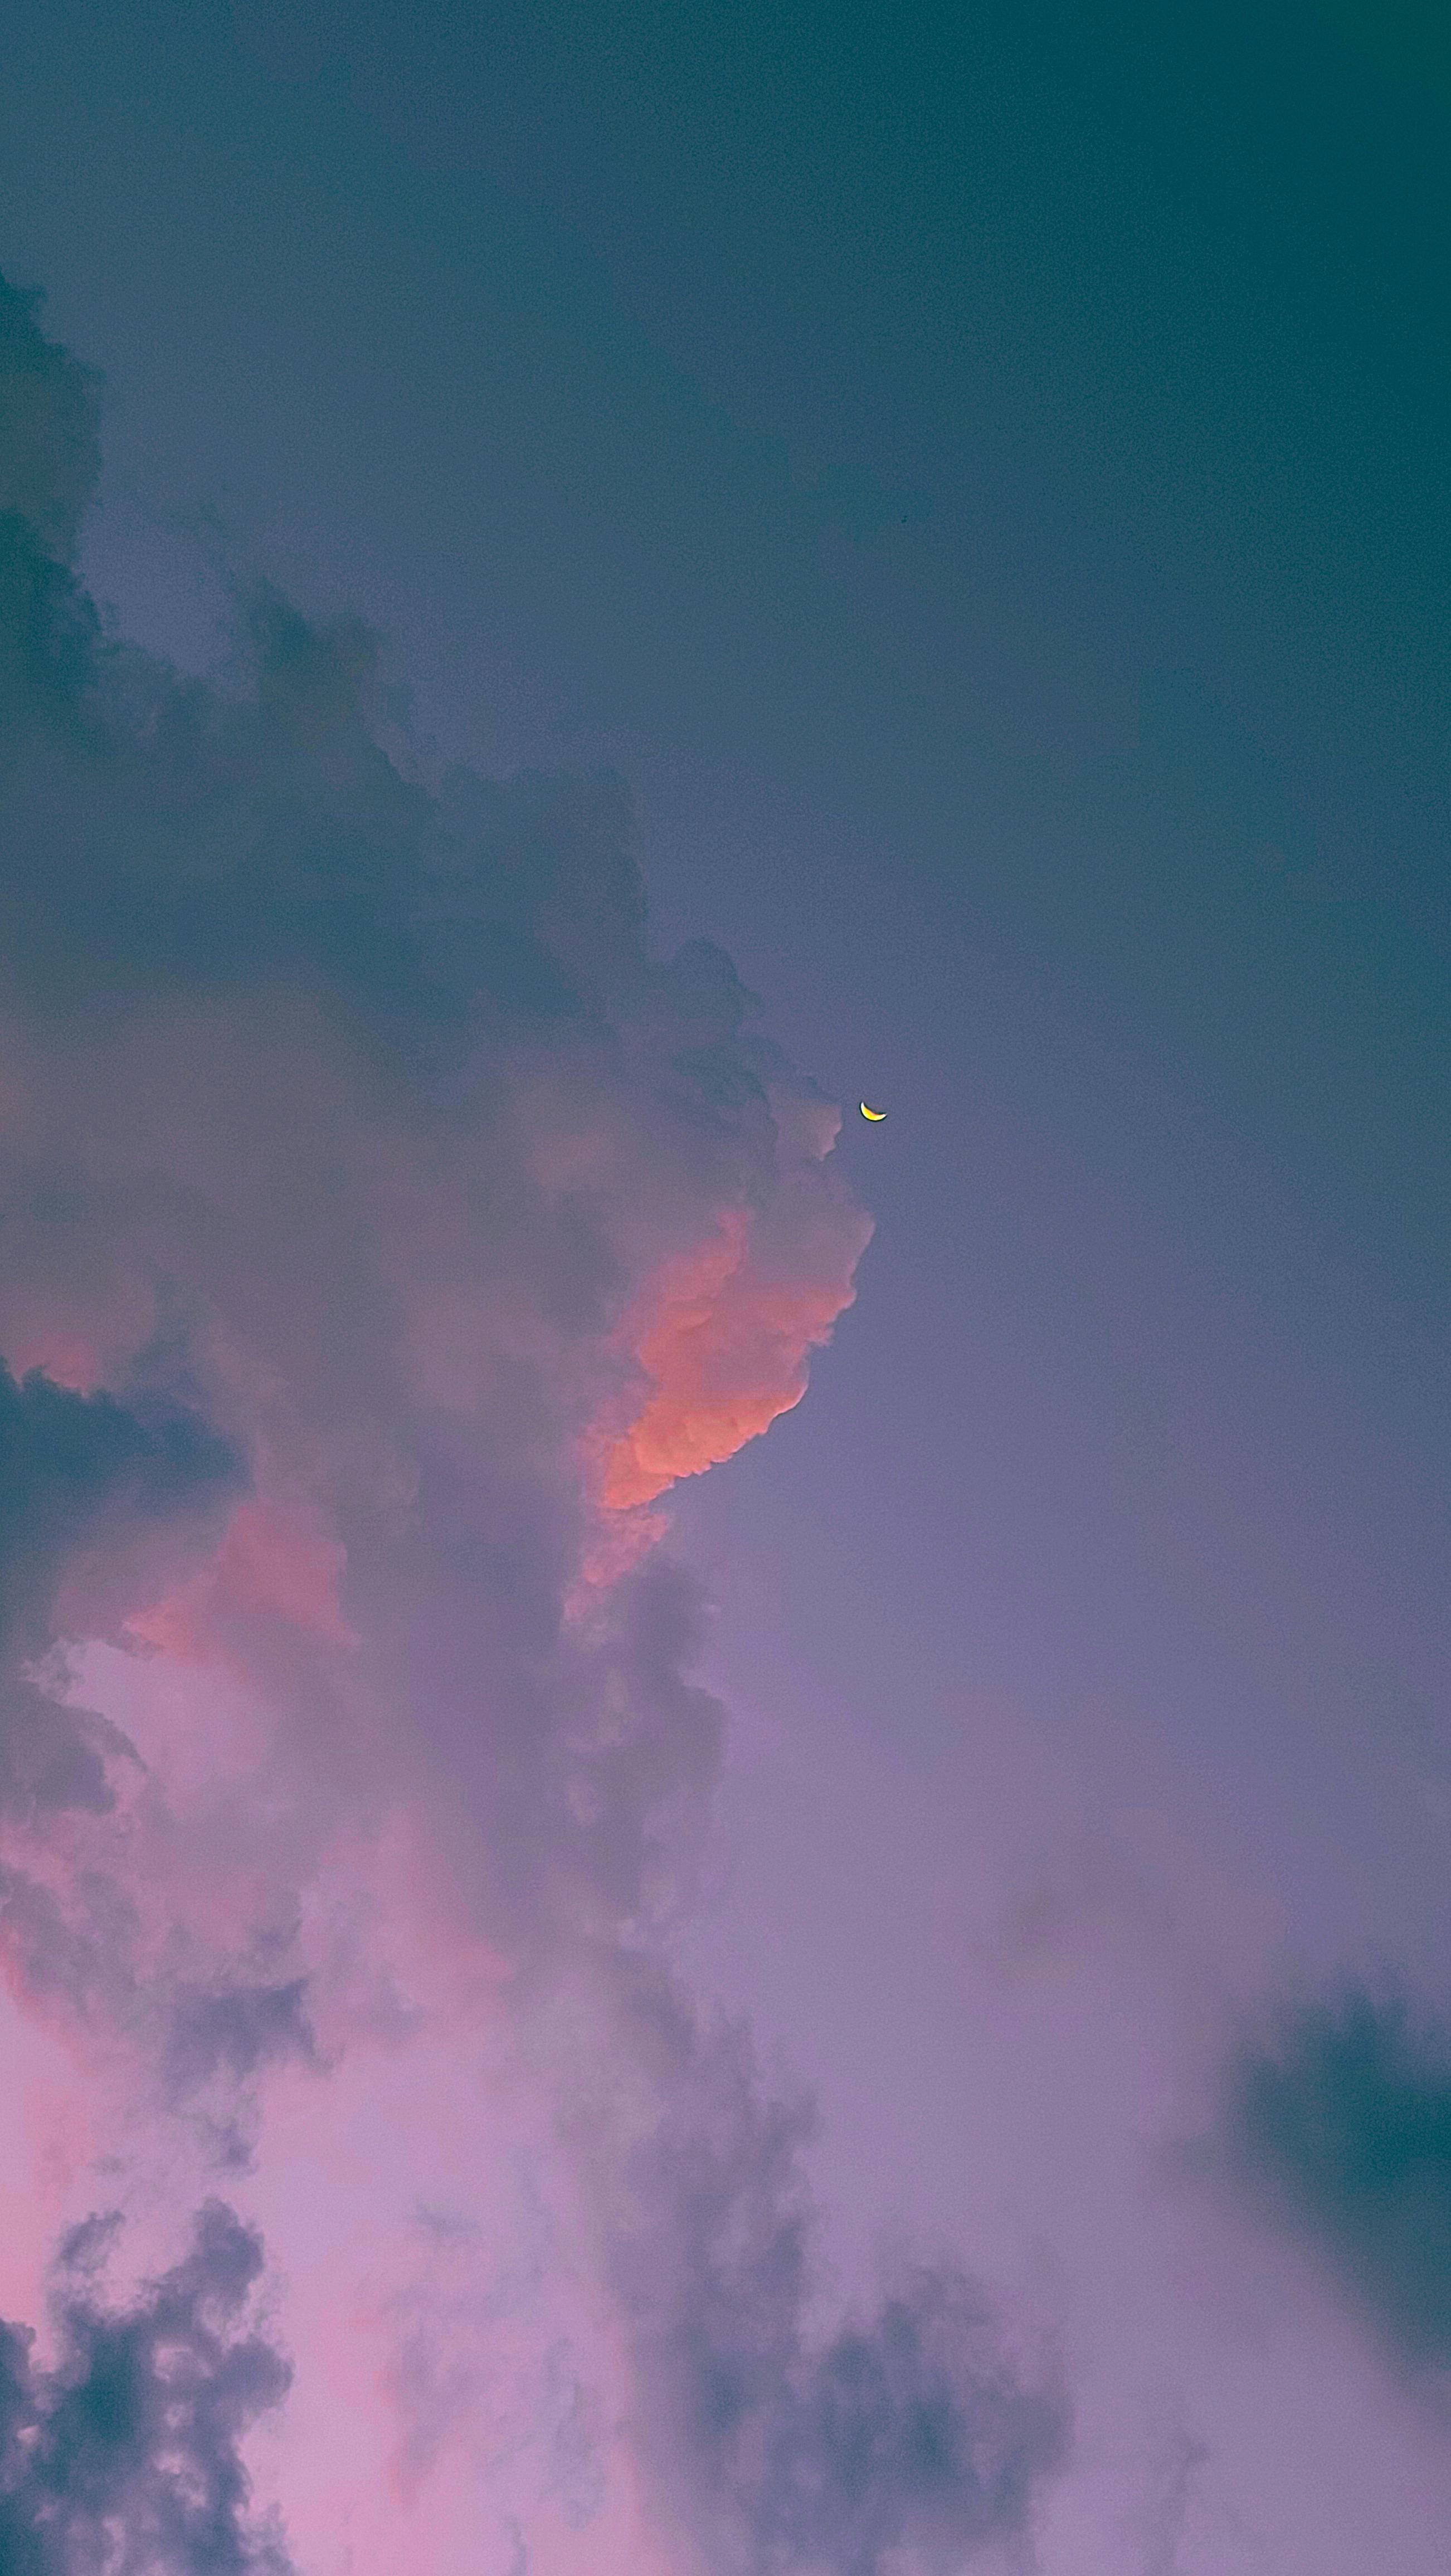 Full moon Wallpaper 4K Aesthetic Clouds Pink sky 1653